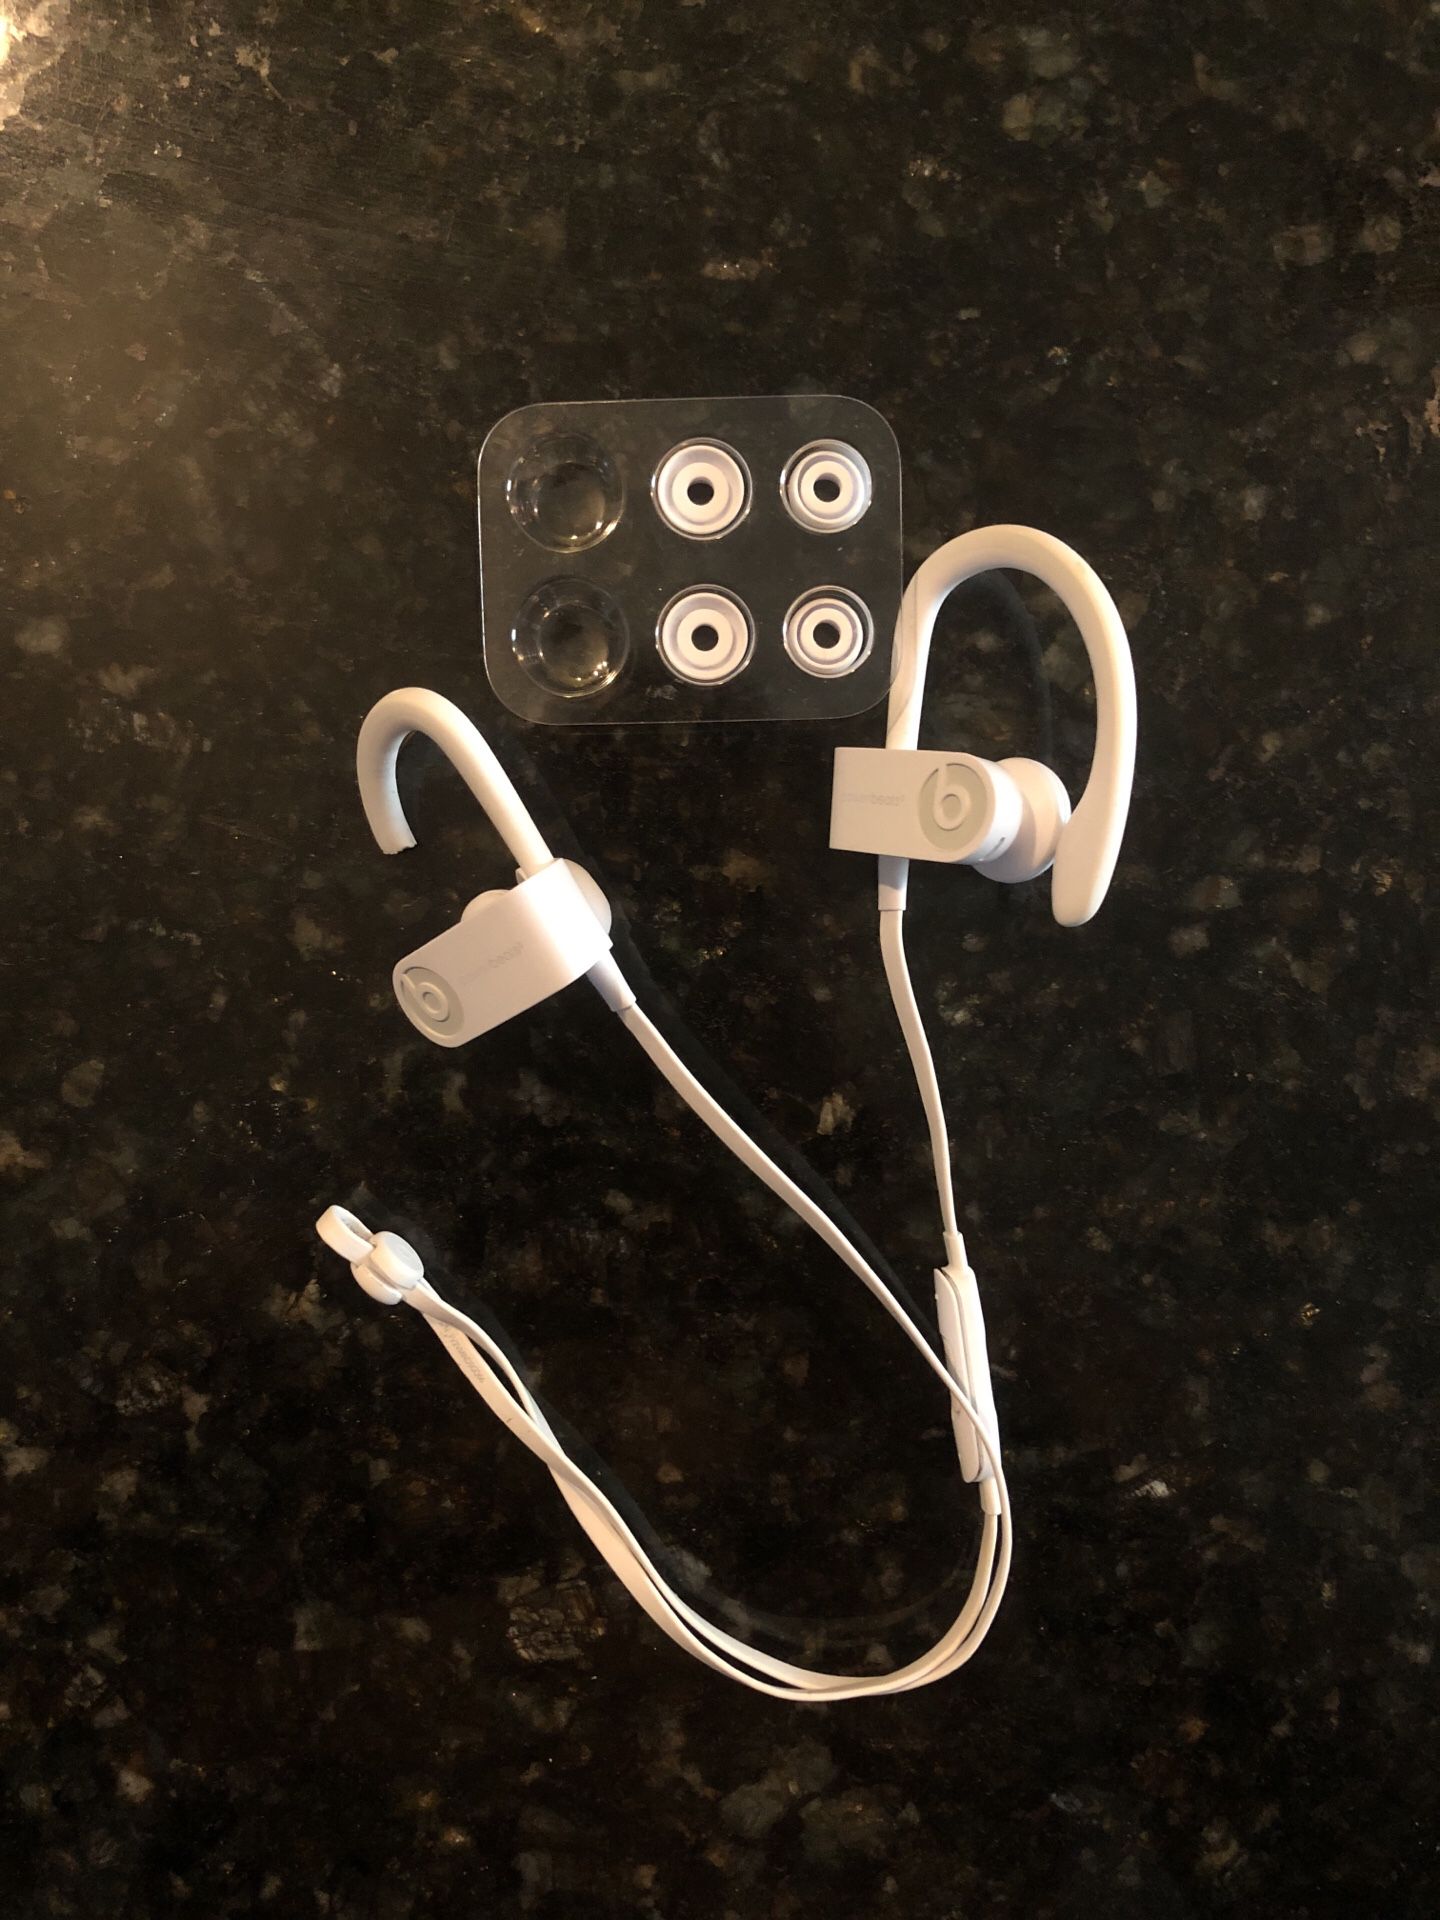 Powerbeats 3 Headphones - White